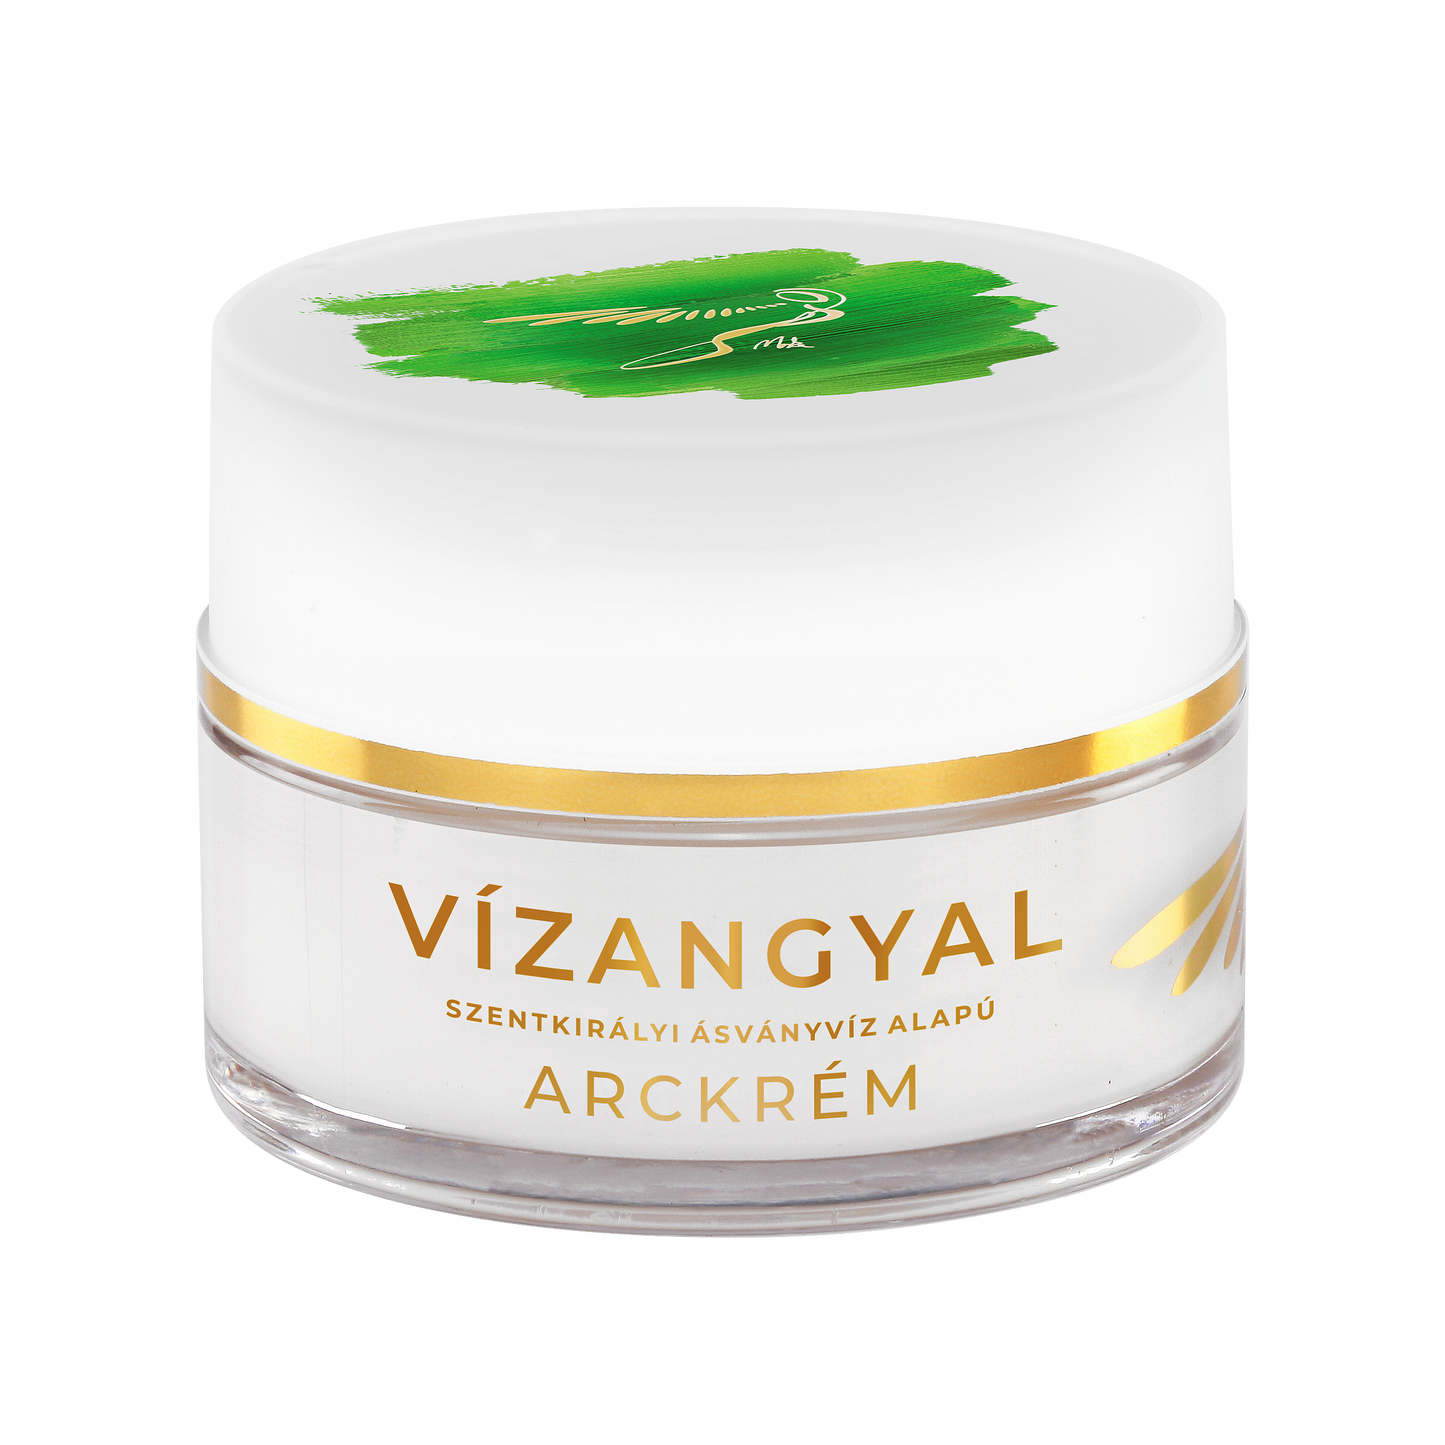 VÍZANGYAL – vitamin face cream - 50 ml